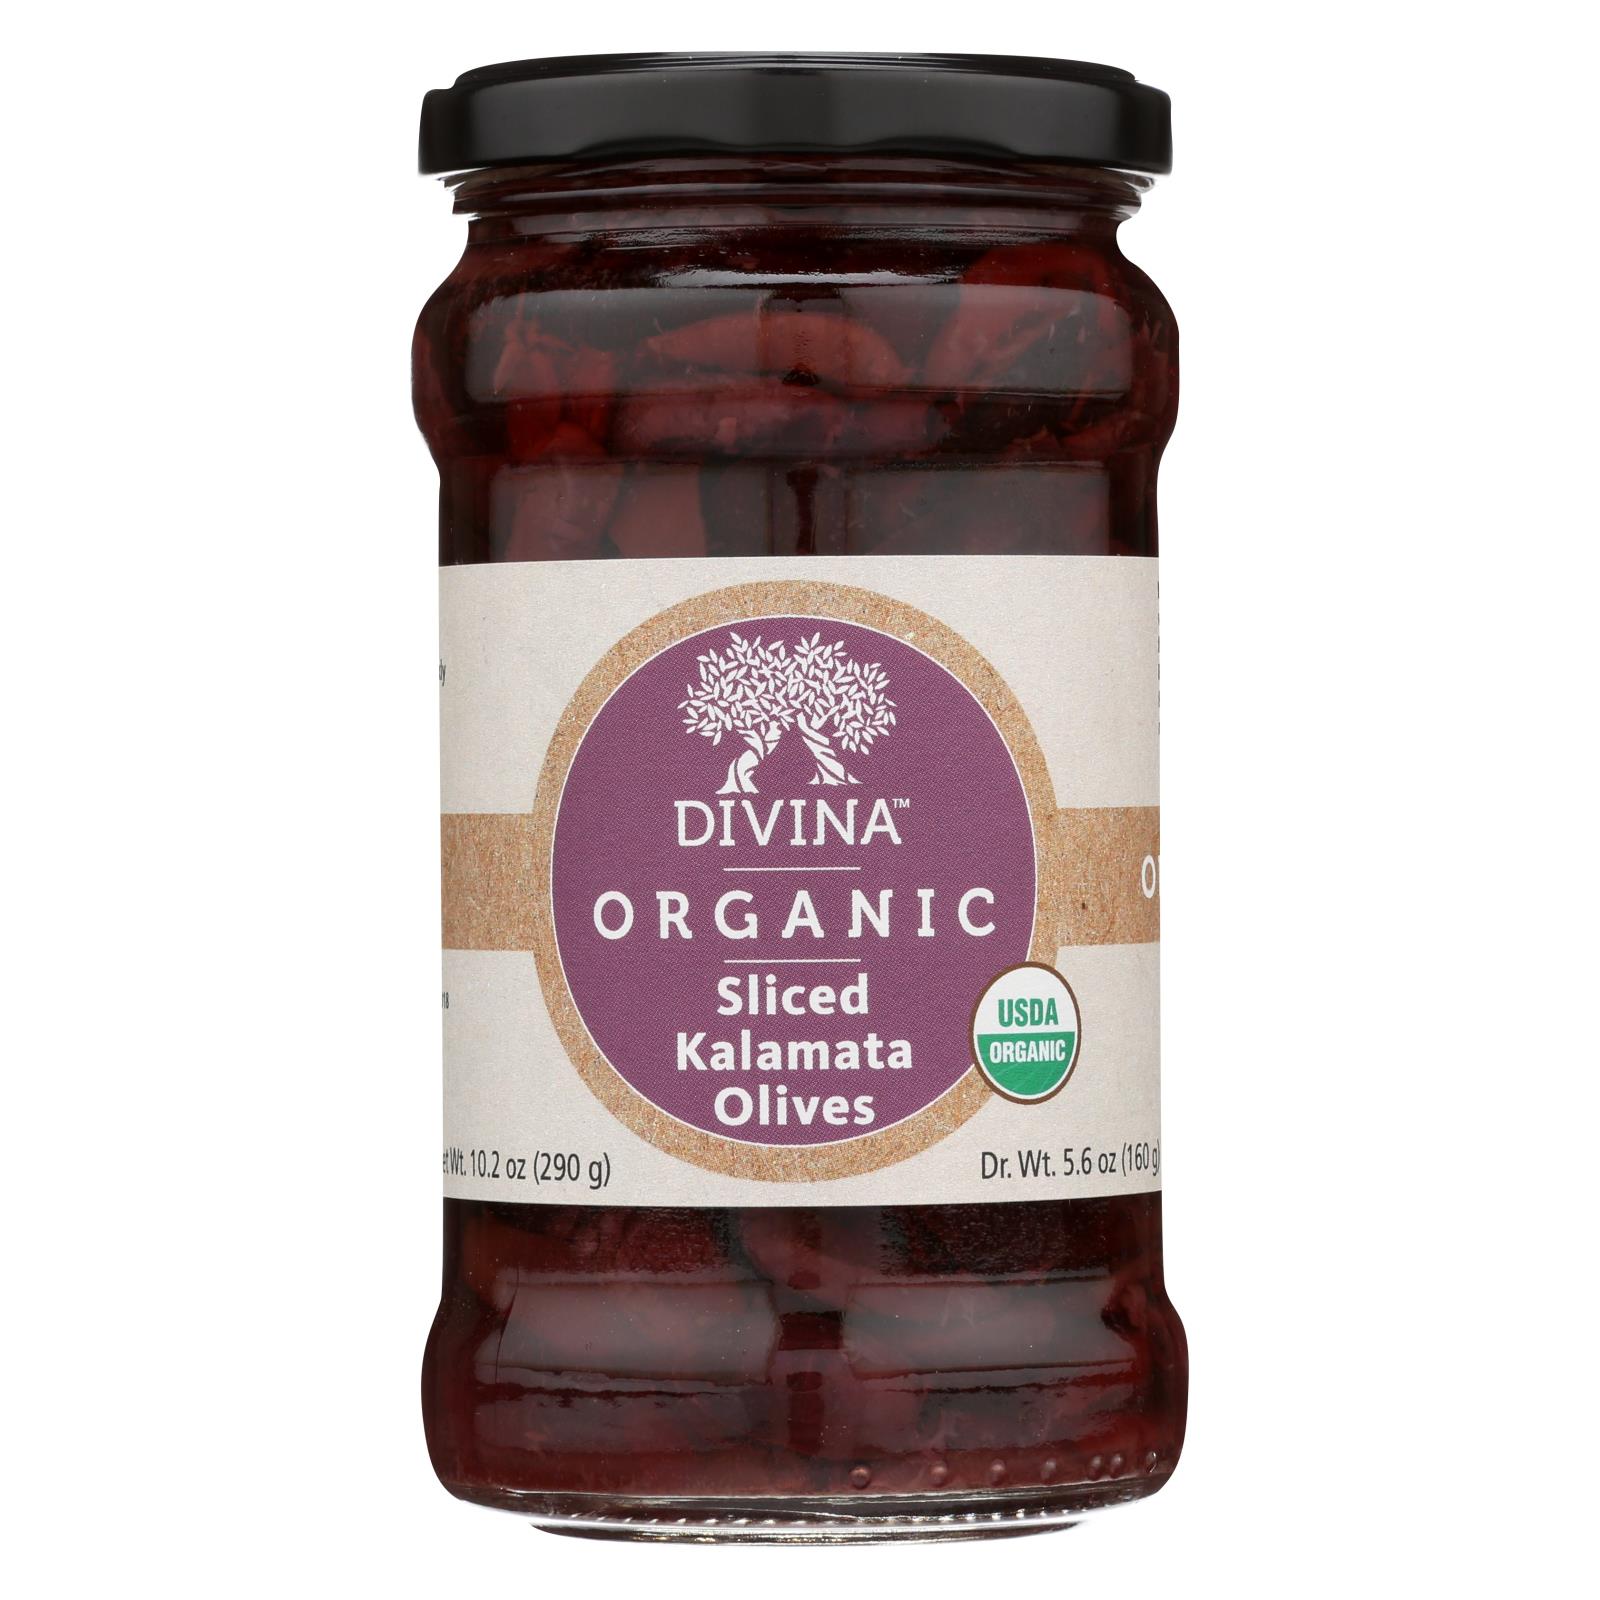 Divina - Organic Olives - Kalamata Sliced - 6개 묶음상품 - 5.6 oz.